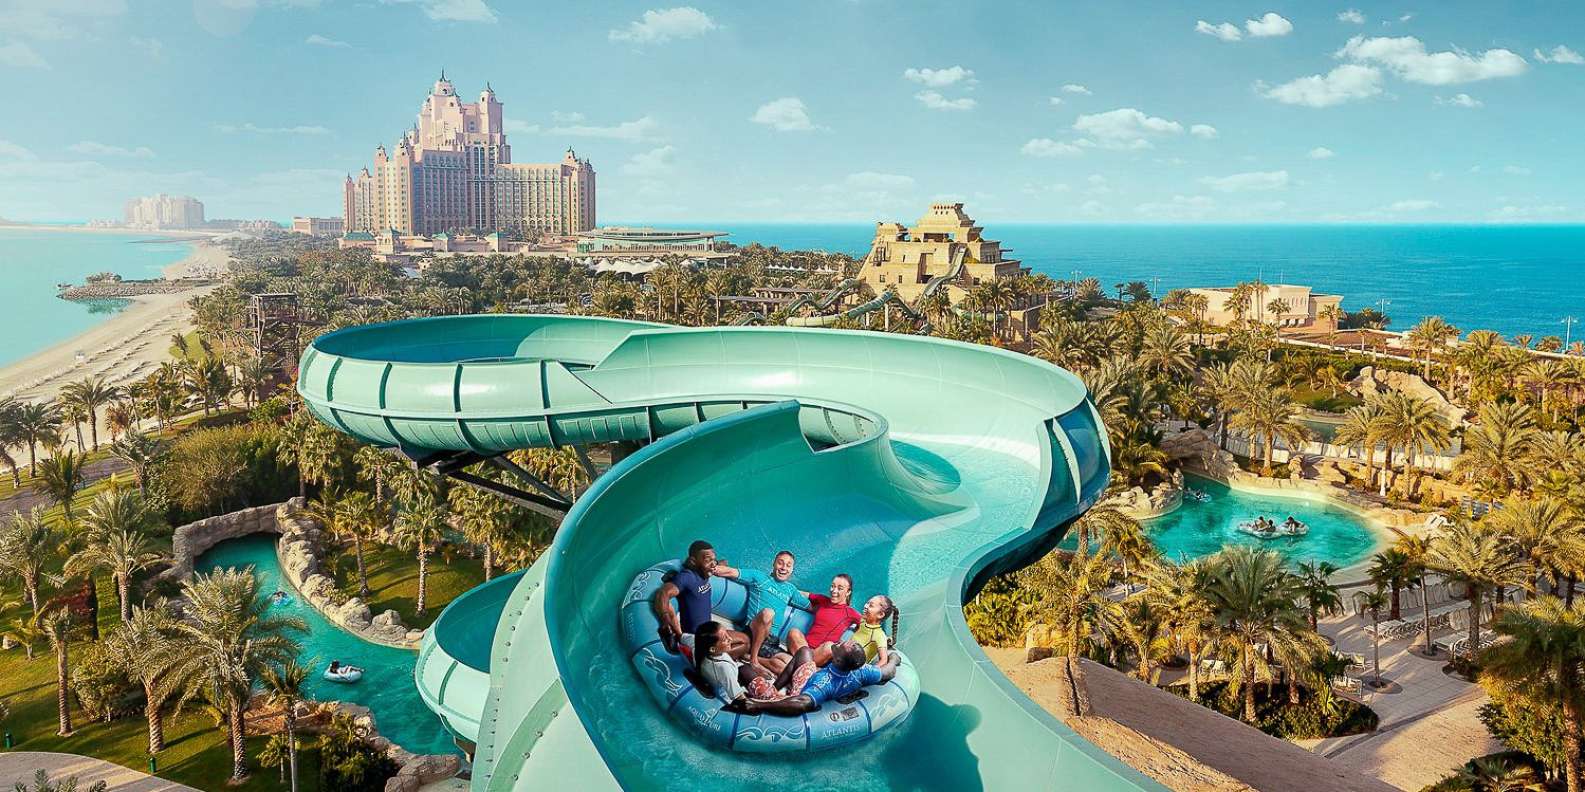 Maximize Your Fun at Aquaventure Waterpark Dubai: Simple Tips